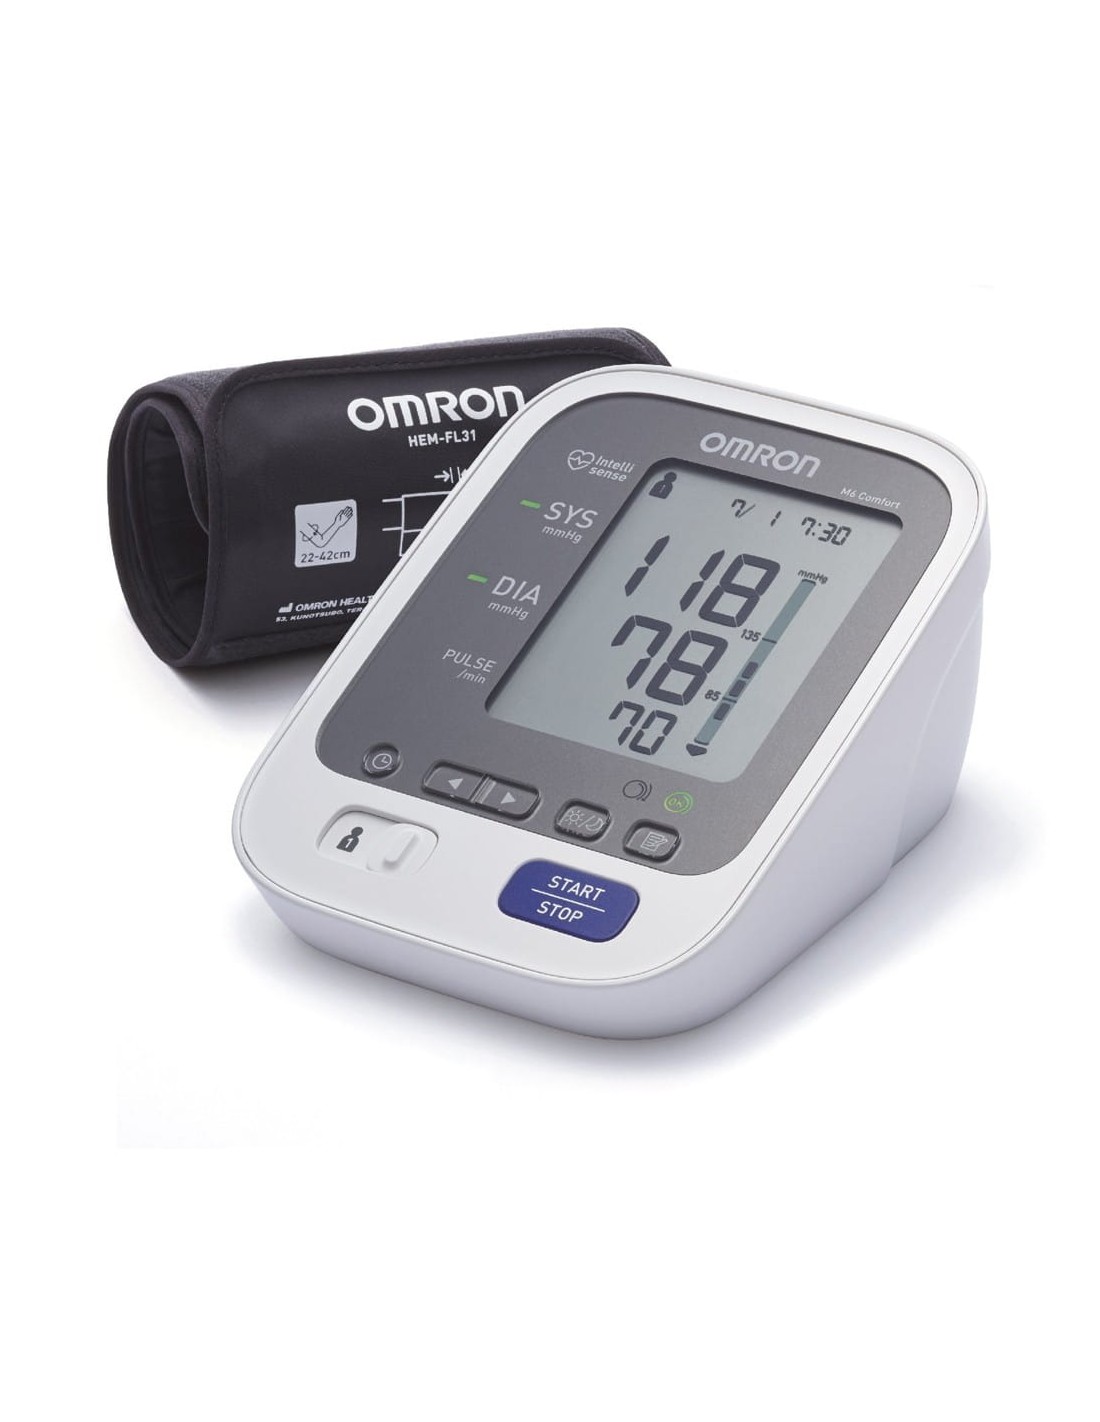 Aparato presión arterial brazo Omron M3 Comfort - Farmacia Guimera